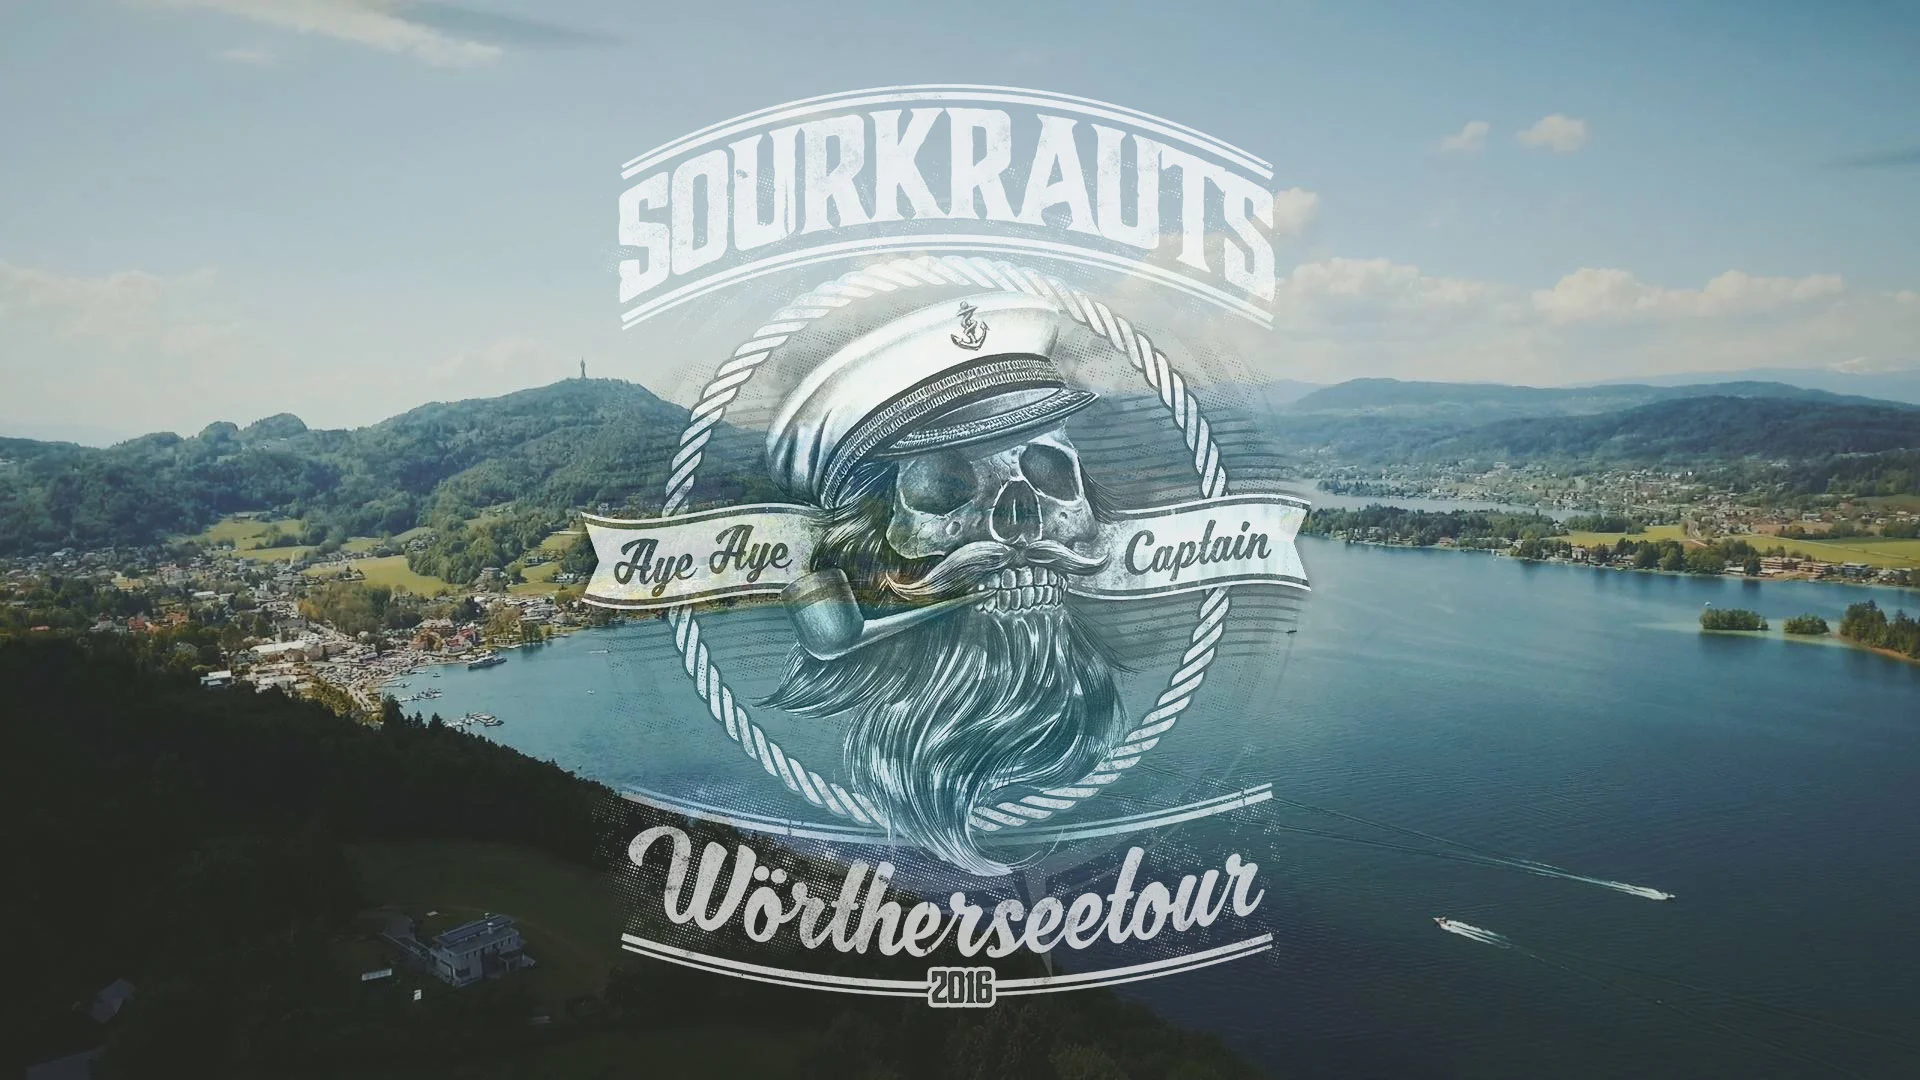 Sourkrauts Wörthersee 2016 - After Movie on Vimeo